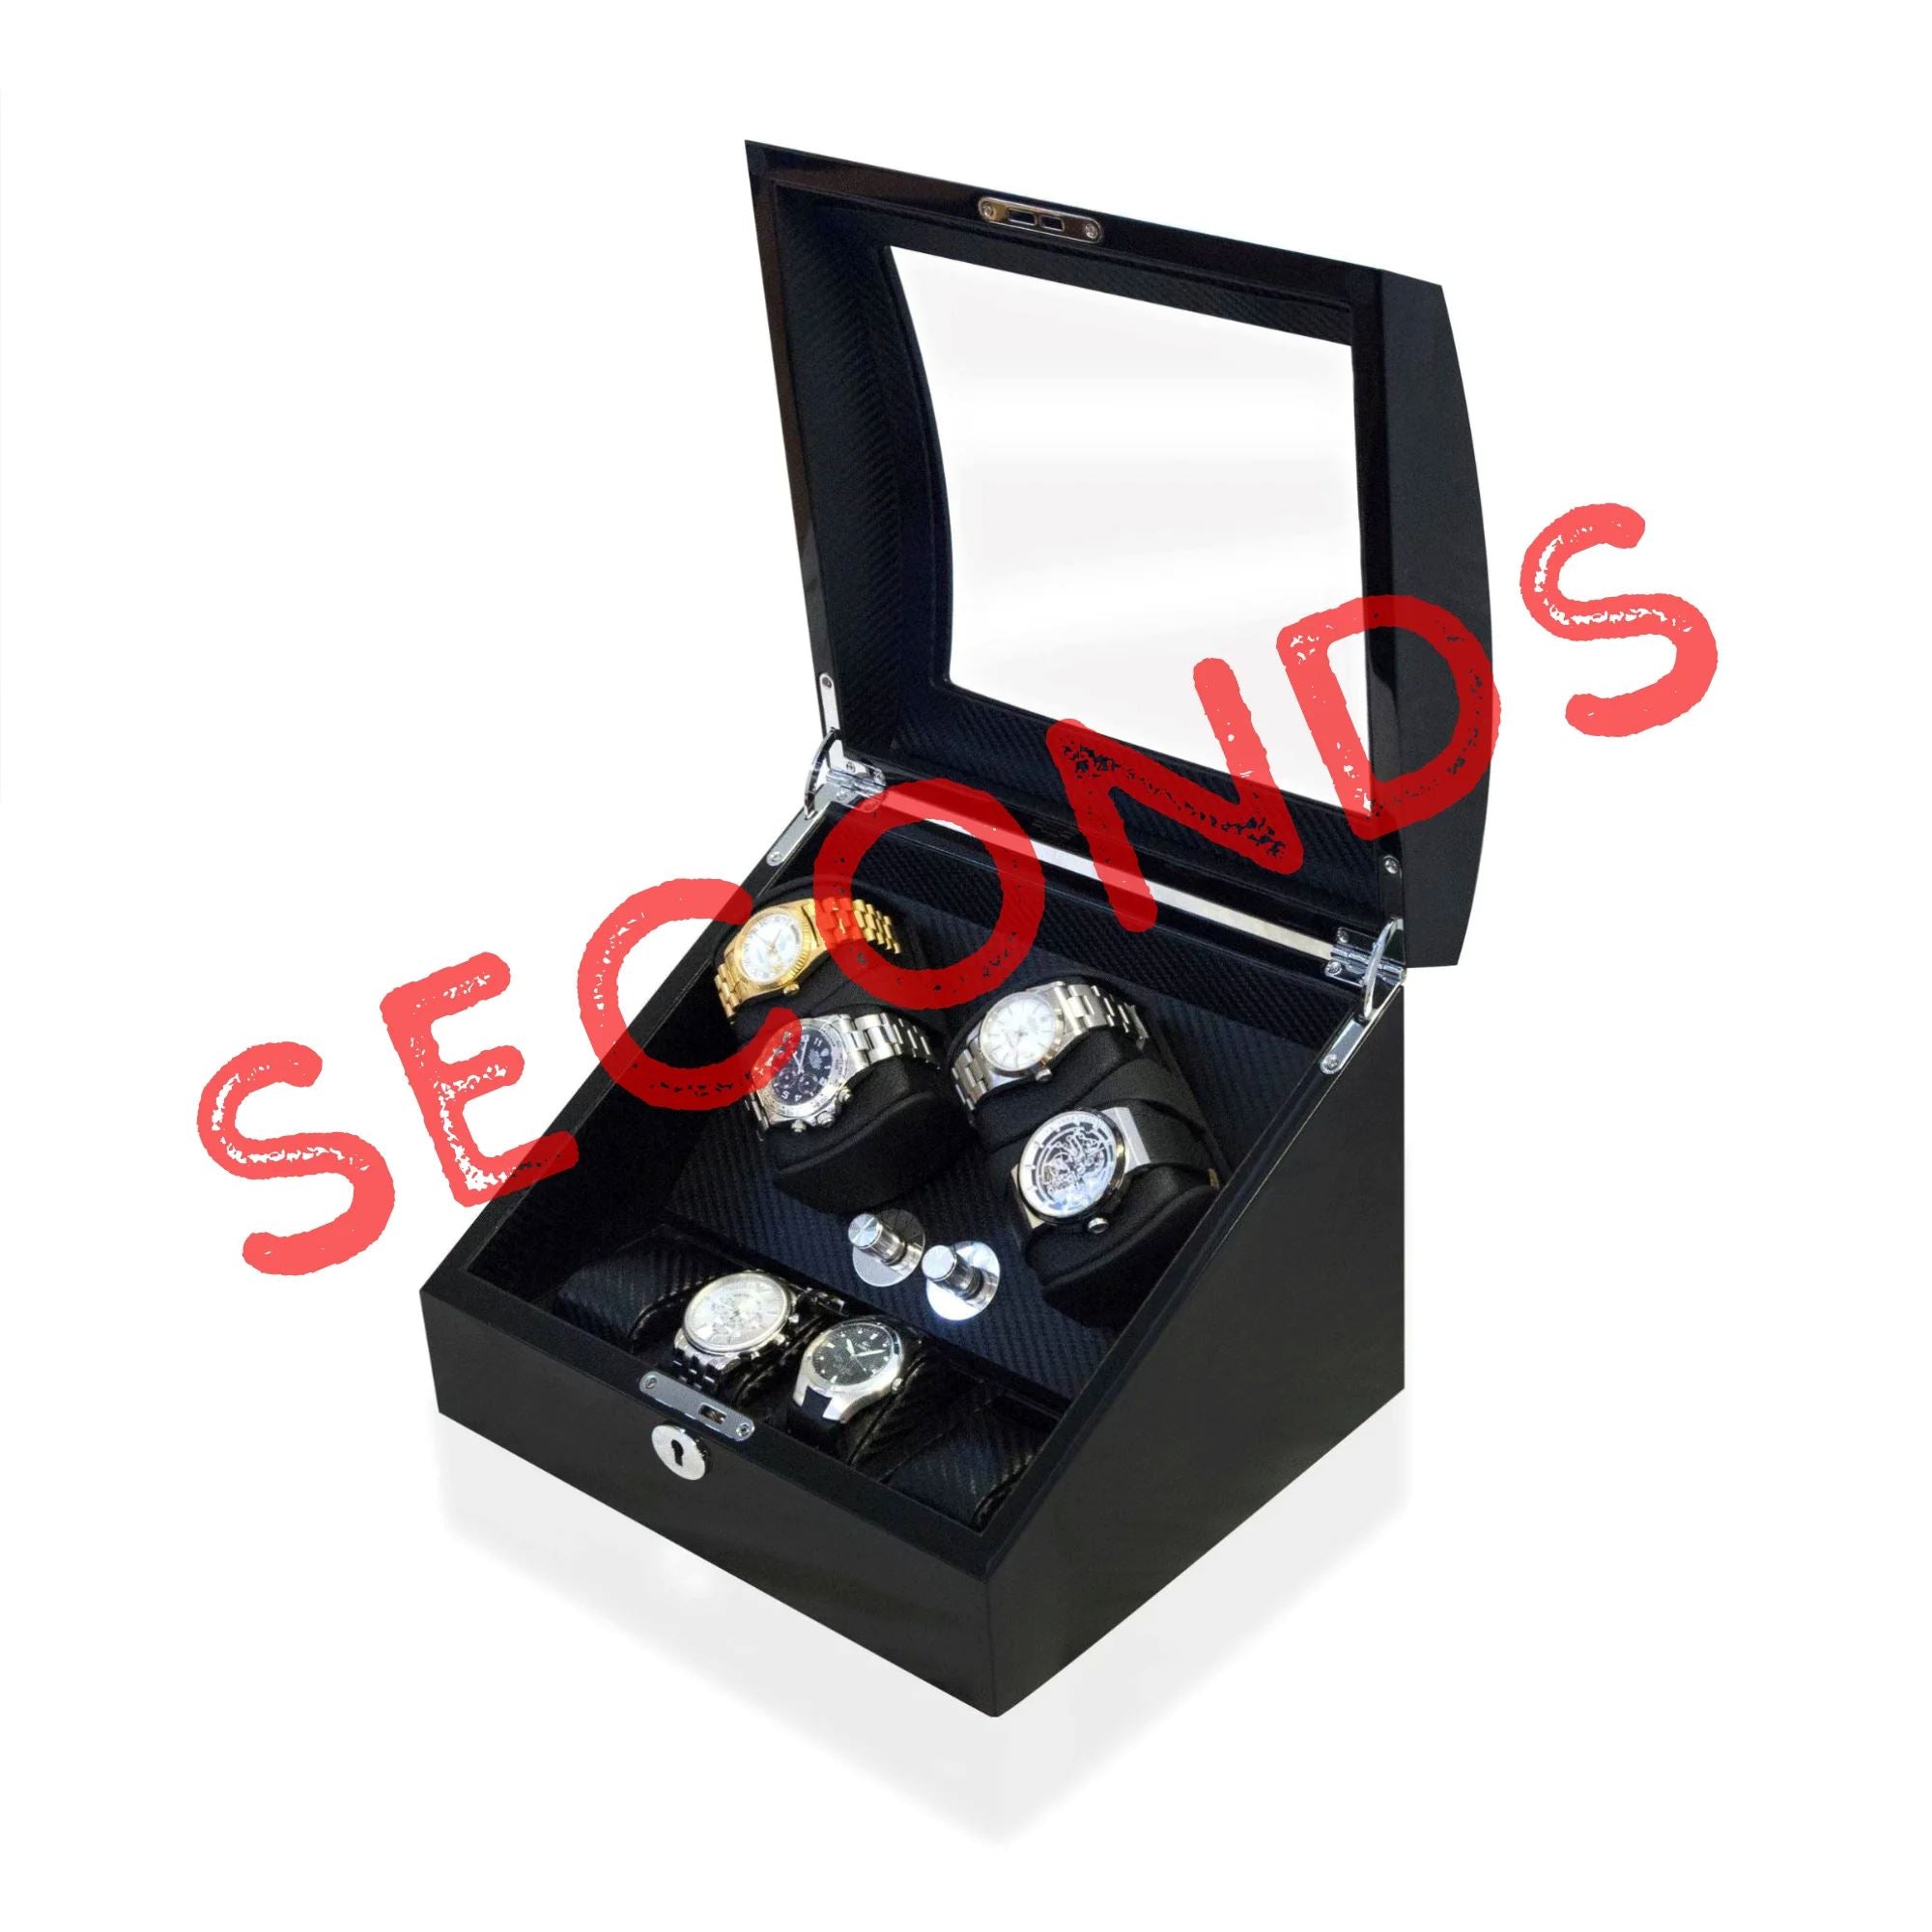 Seconds - Avoca Watch Winder Box 4 + 4 Watches in Black - Carbon Fibre Interior (e) Seconds Clinks 